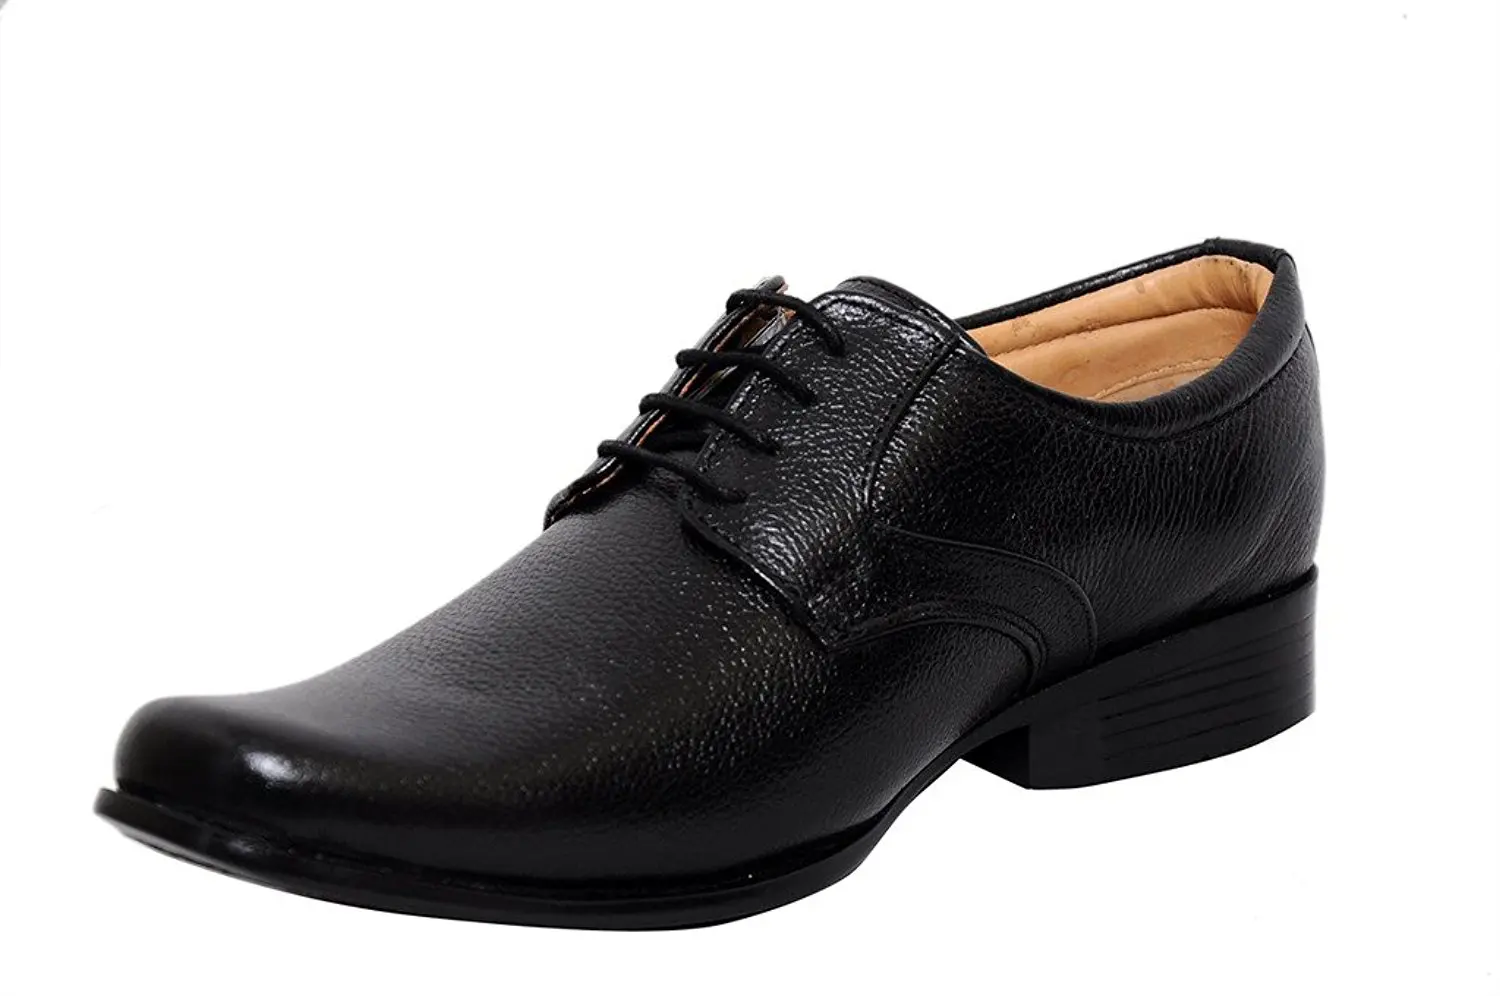 Cheap formal shoes for men online 